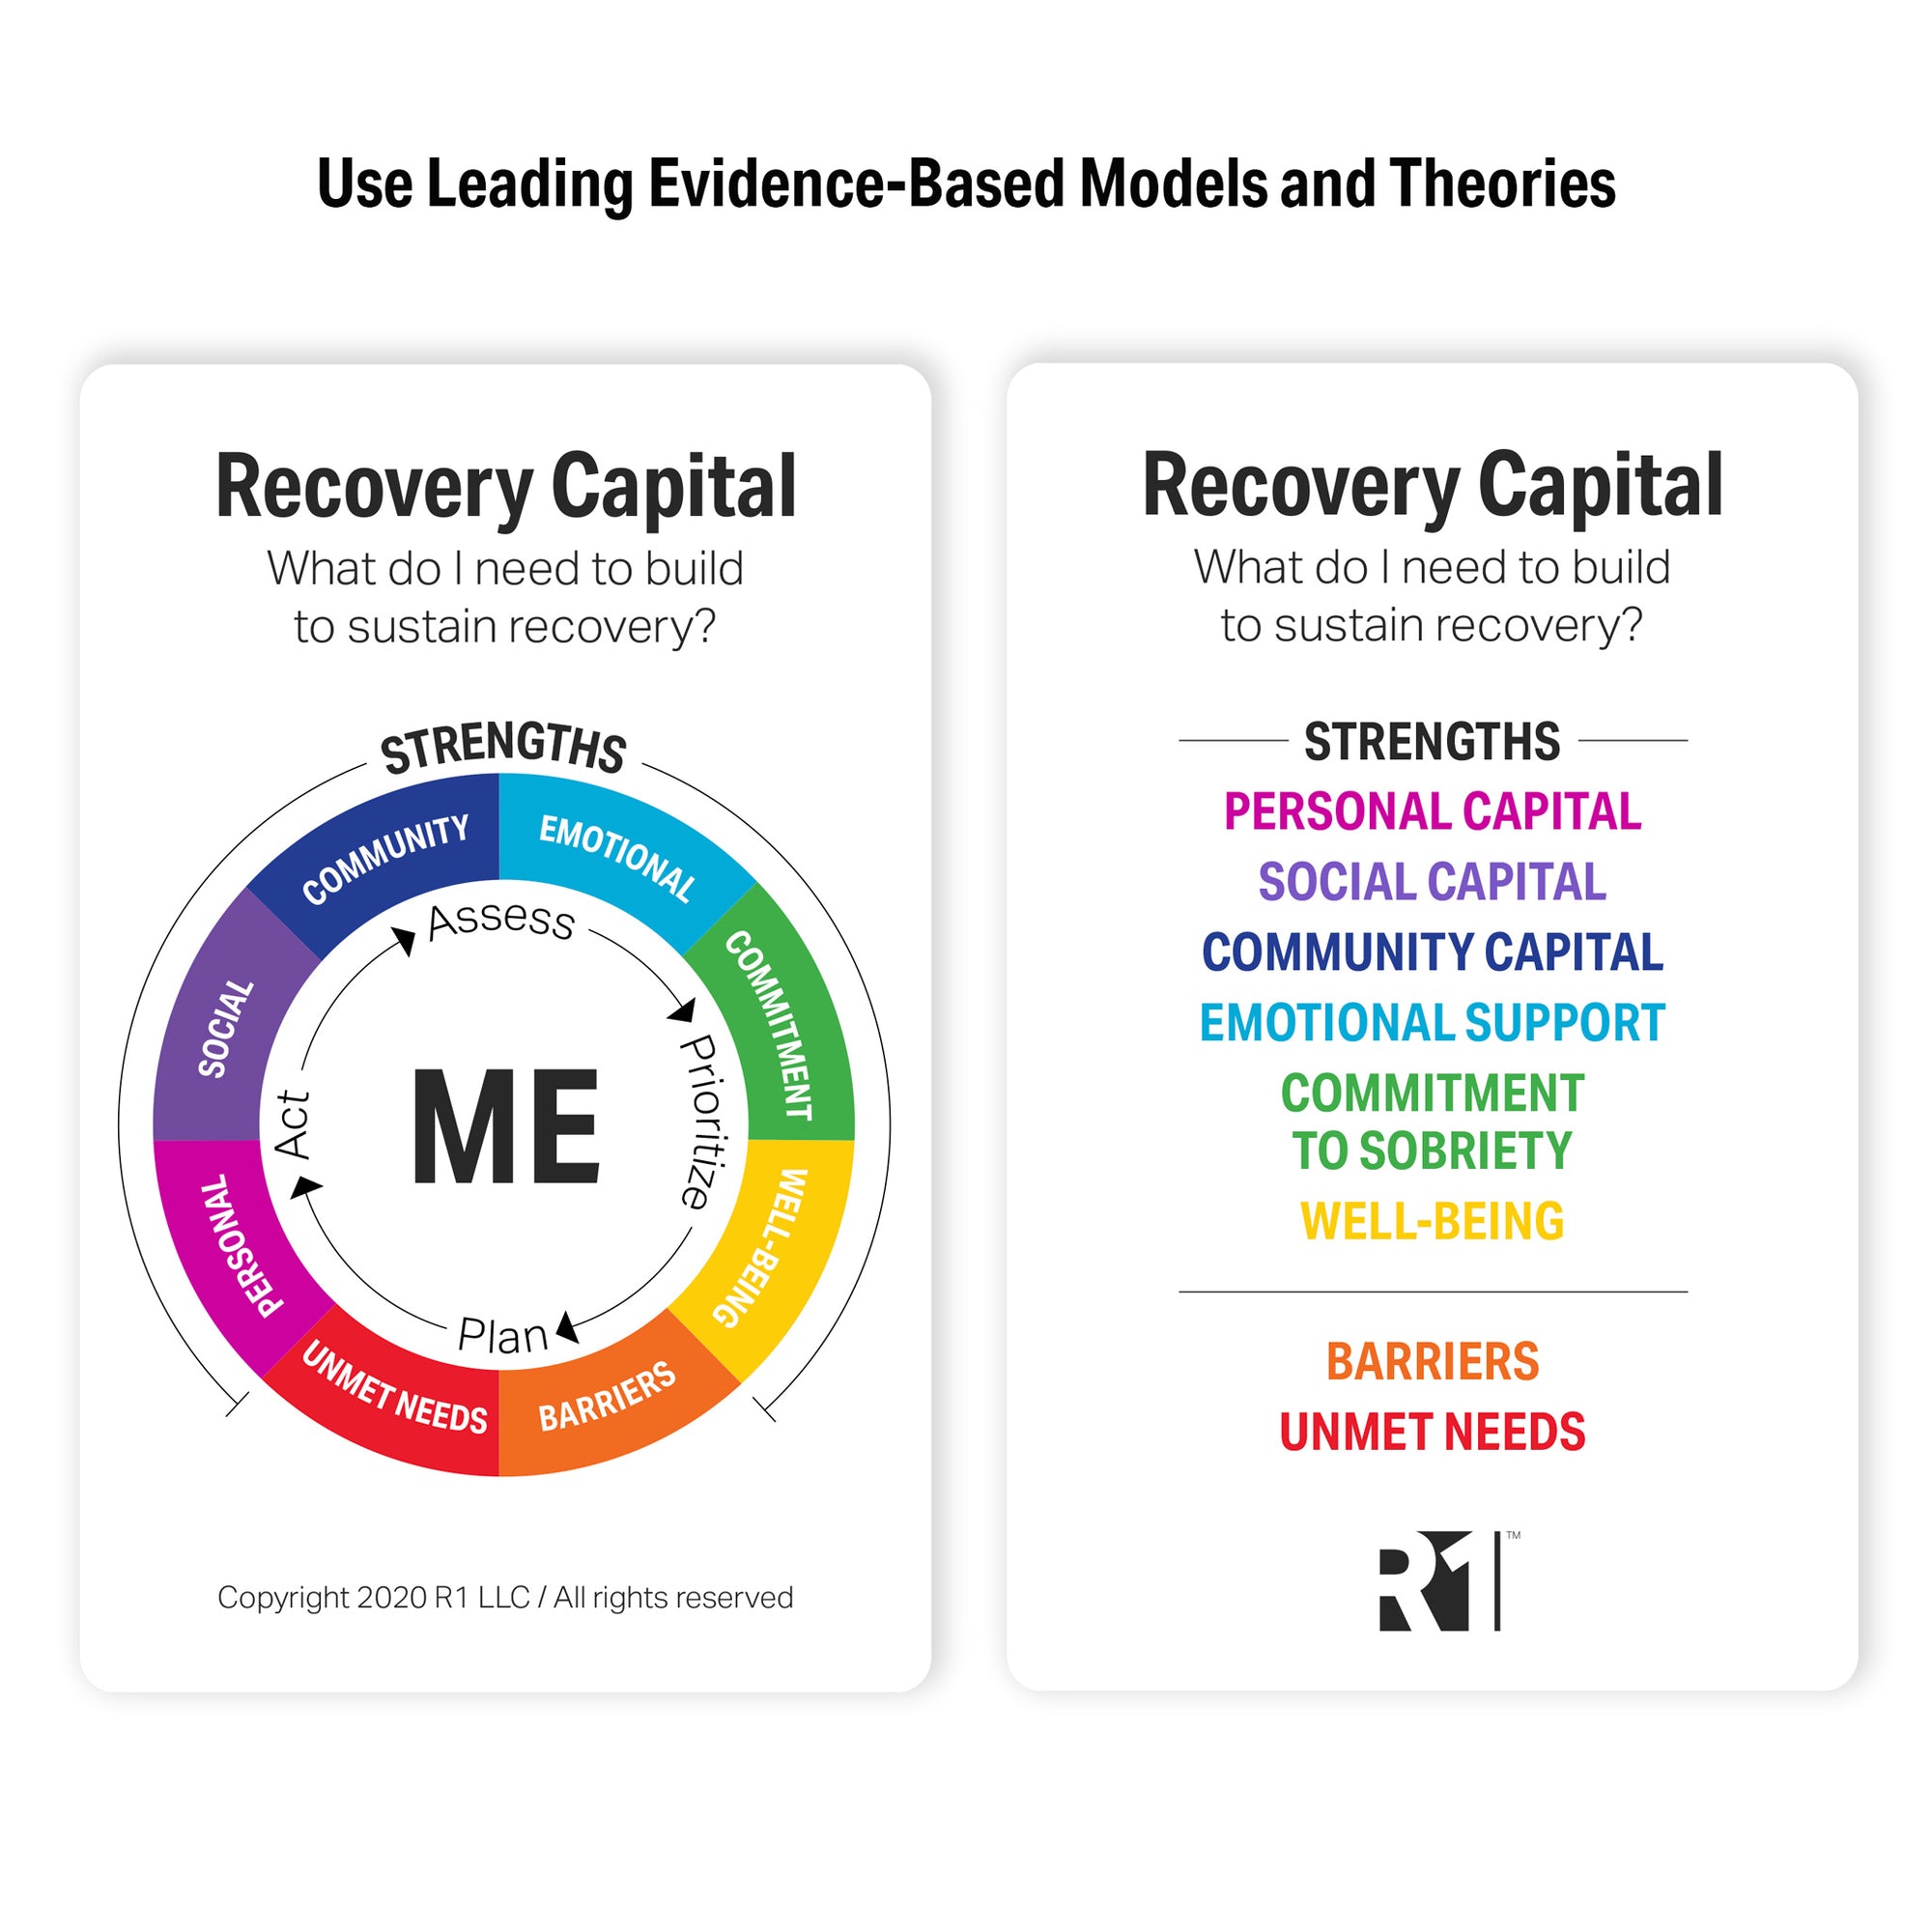 Recovery Capital Group Kit  — 12 decks